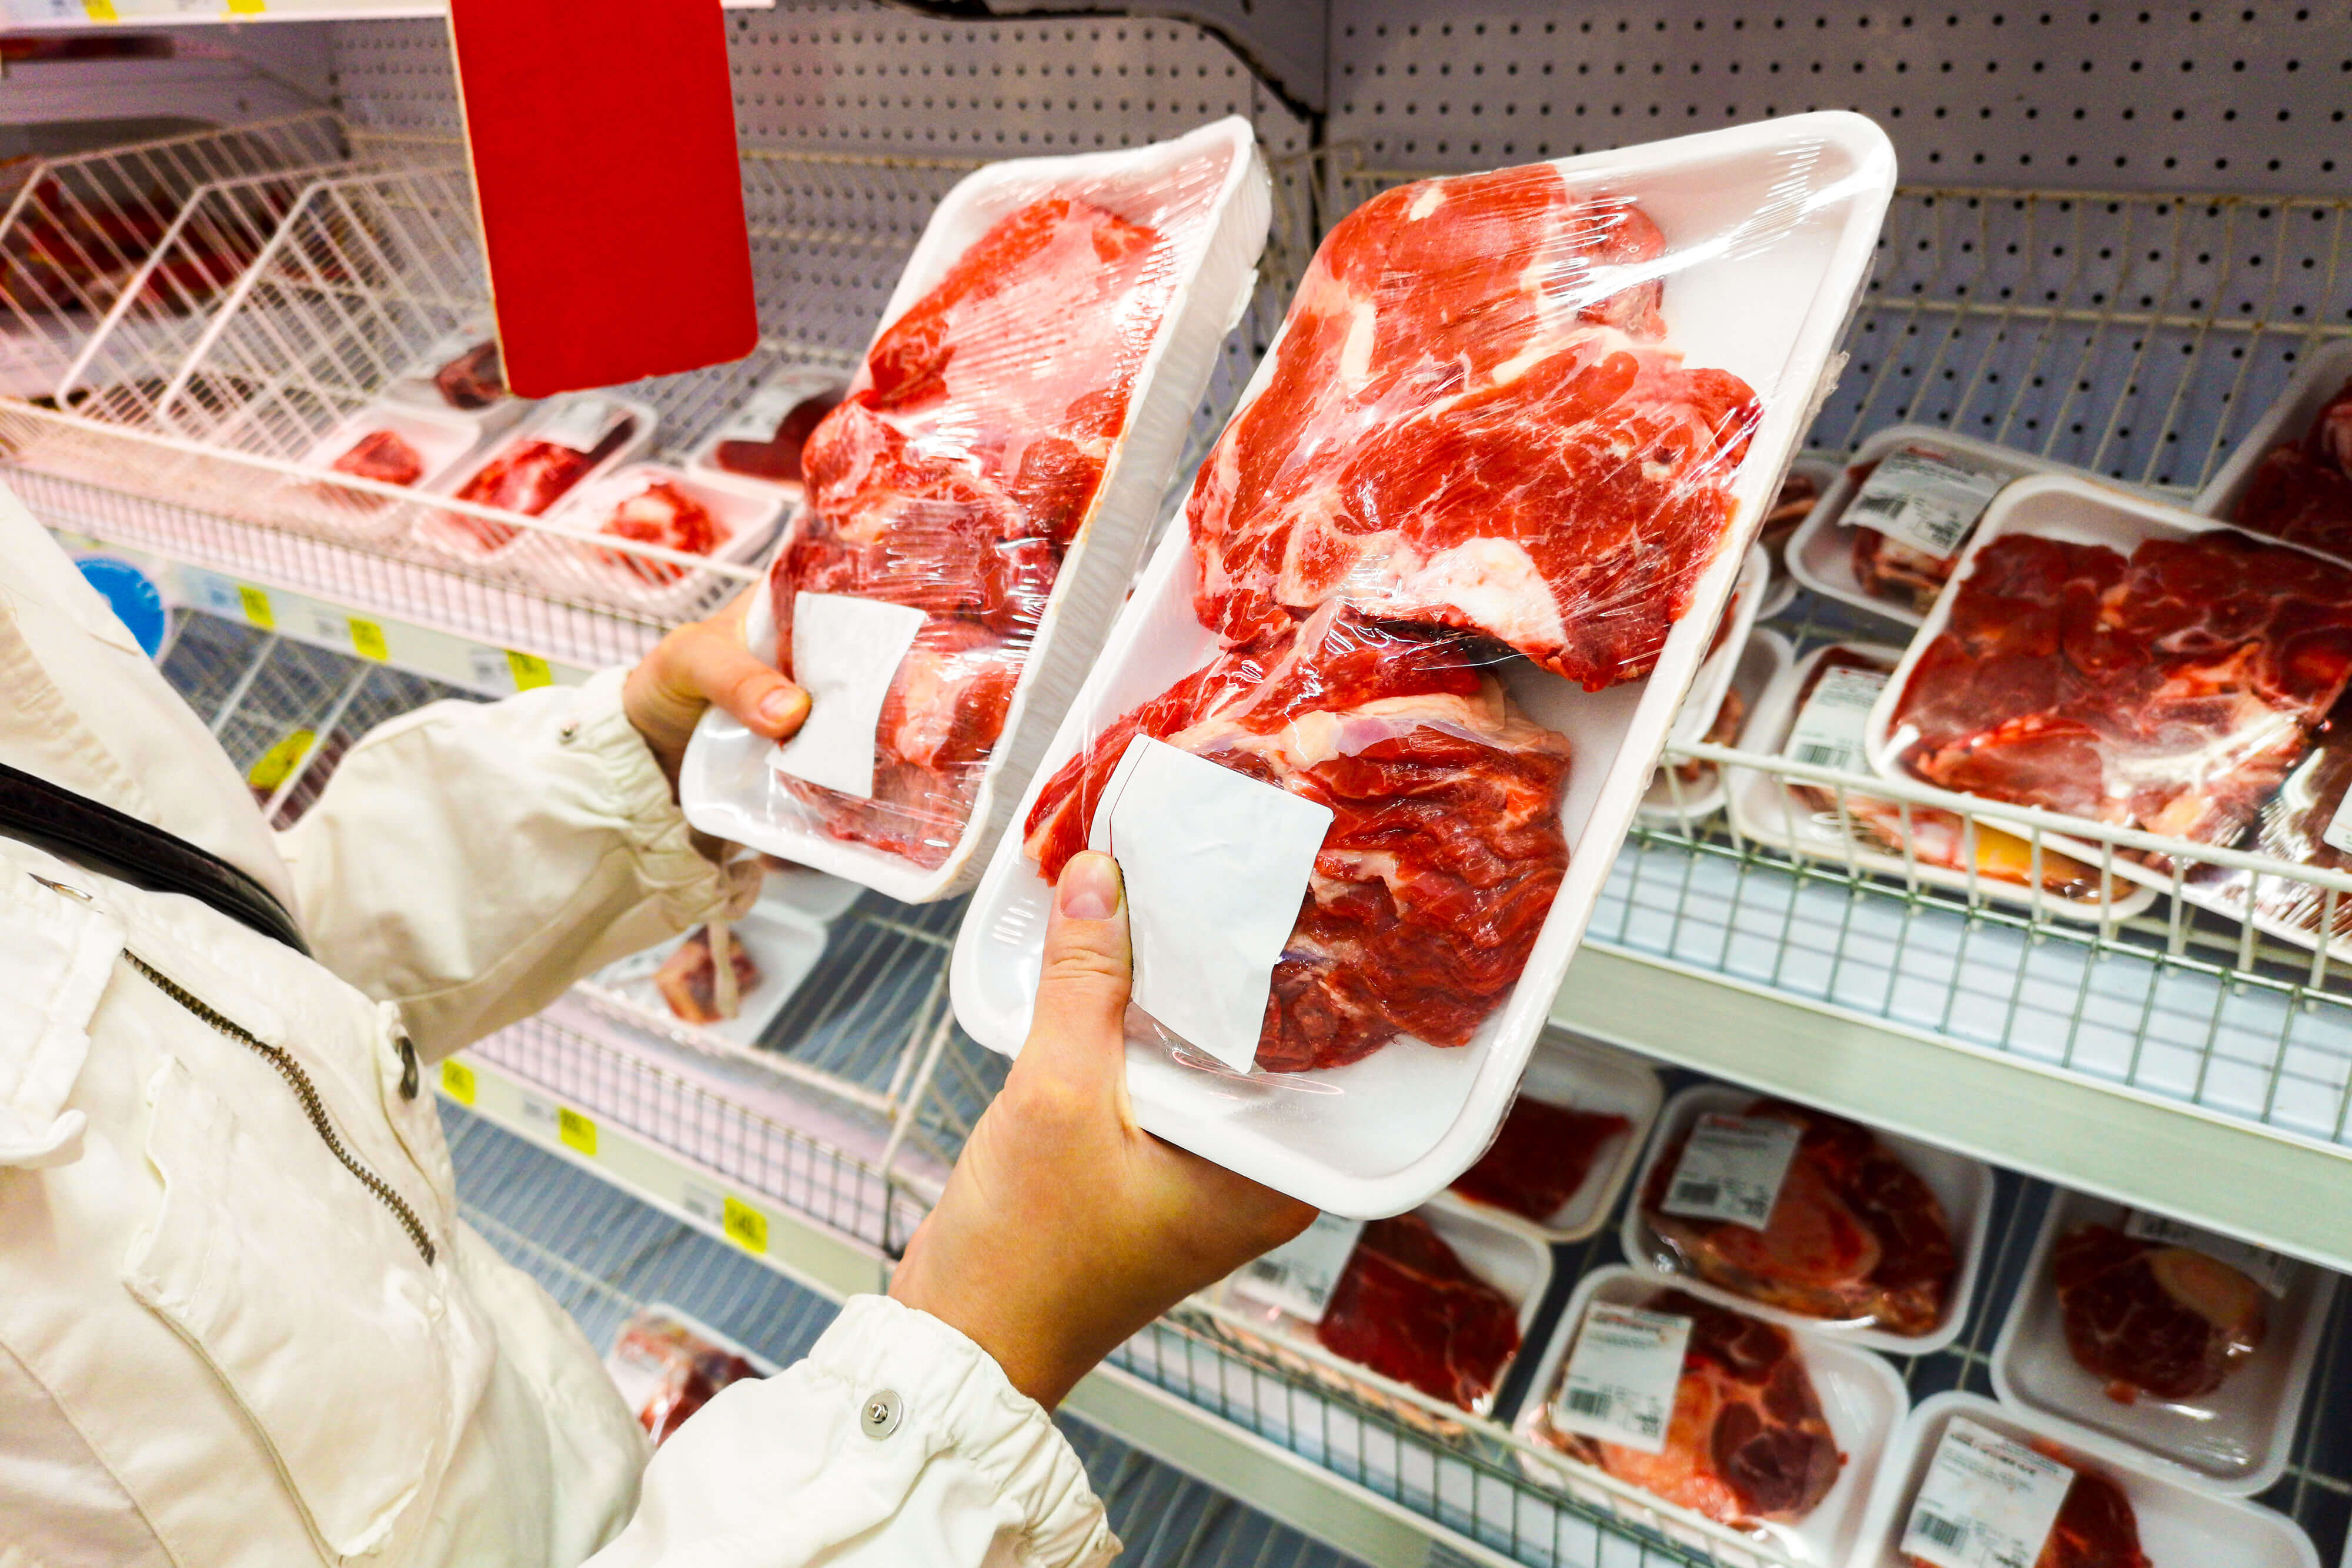 Покупка мяса телефоны. Мясо в супермаркете. Магазин человеческого мяса. Лоток мяса в супермаркетах.